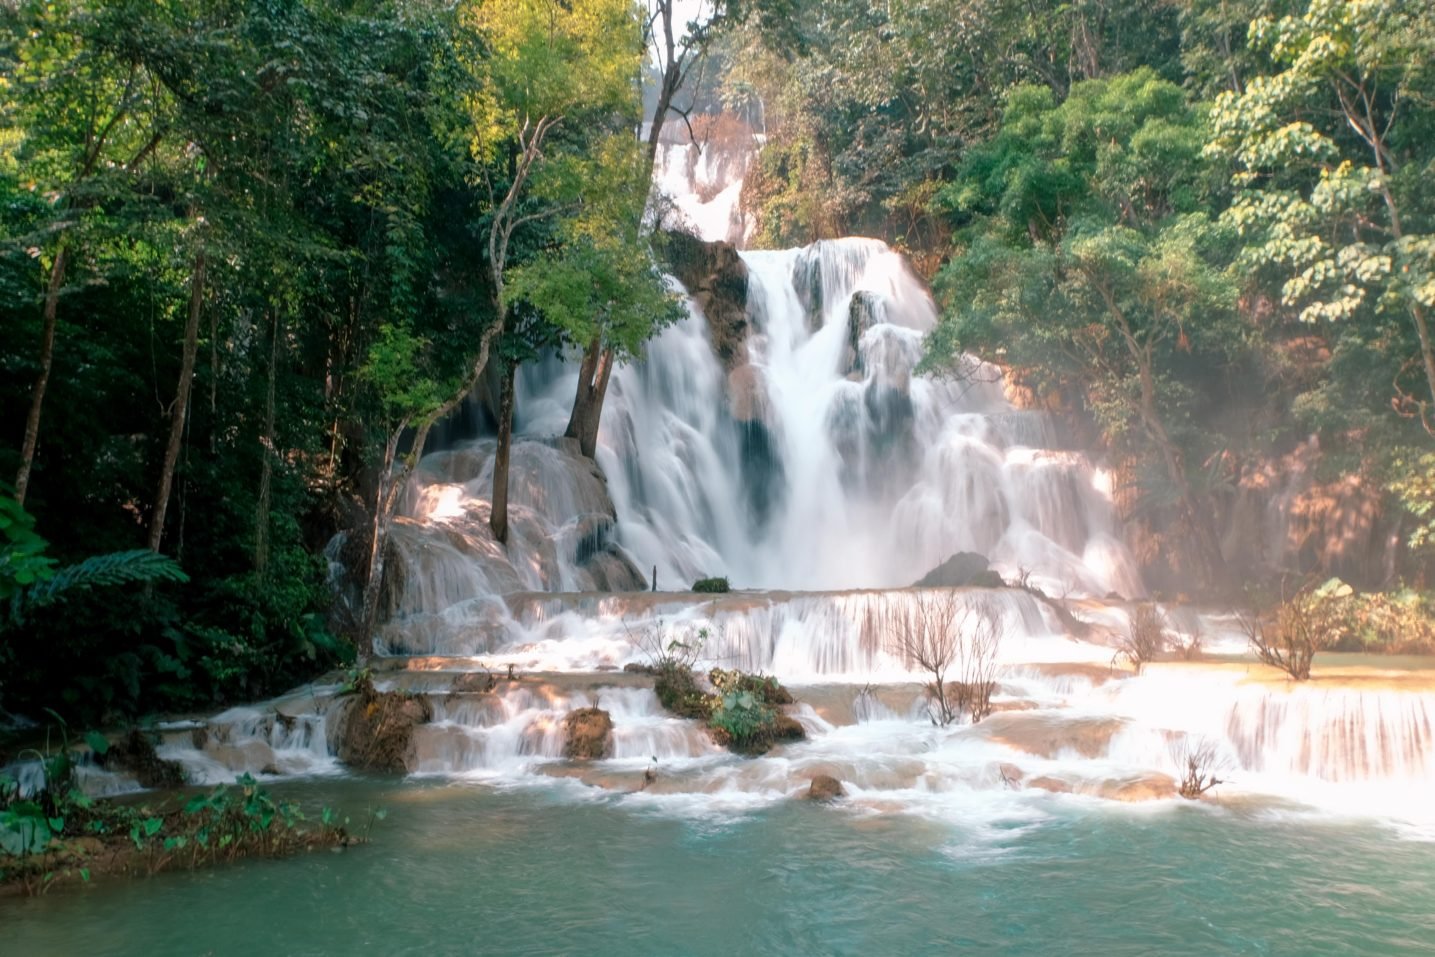 Luang Prabang Laos: Temples & Waterfalls